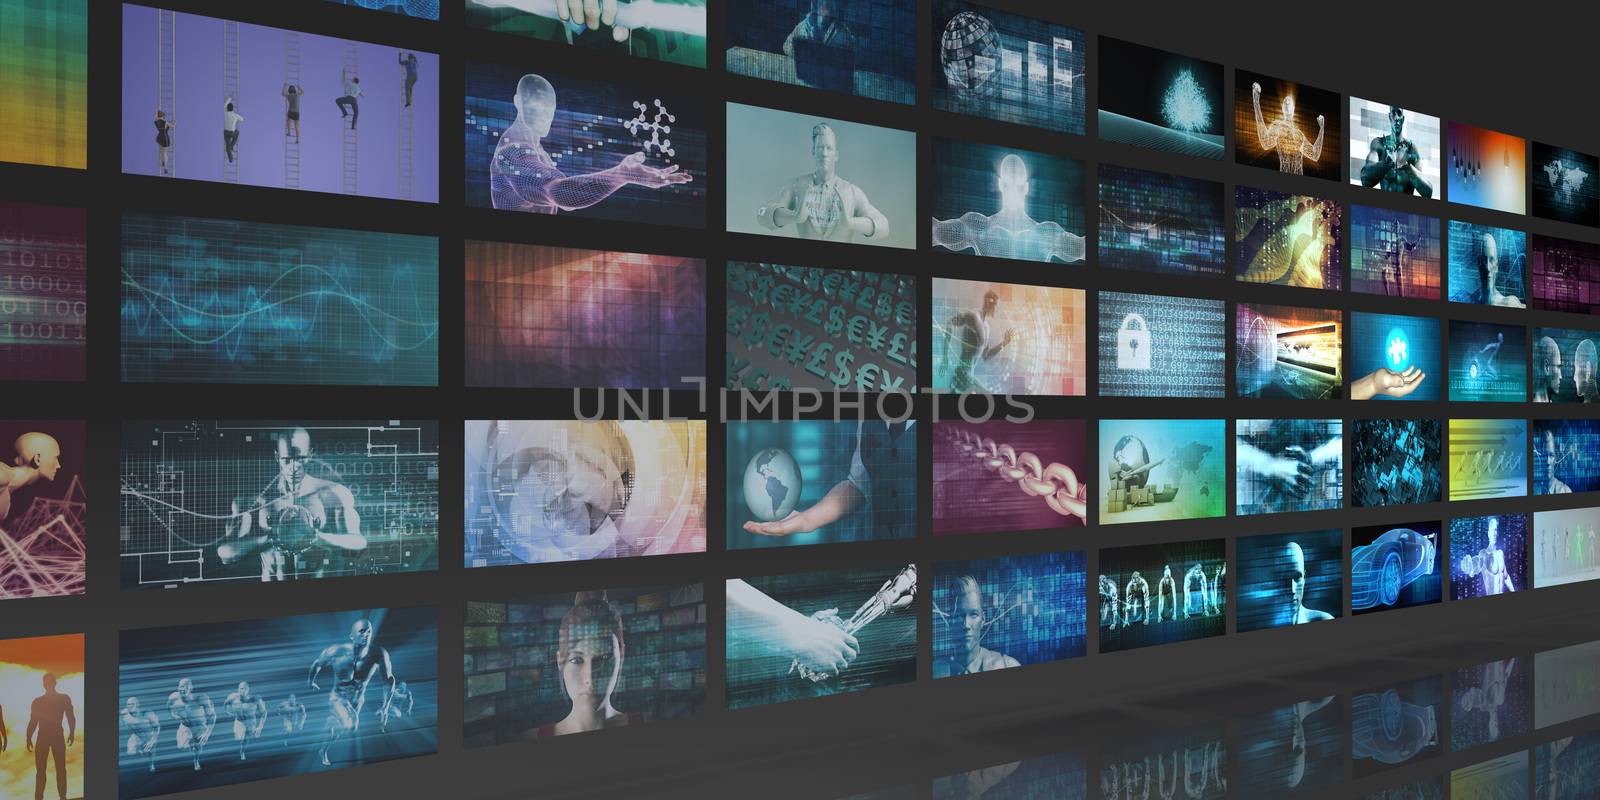 Multimedia Entertainment with Futuristic Video Gallery Art